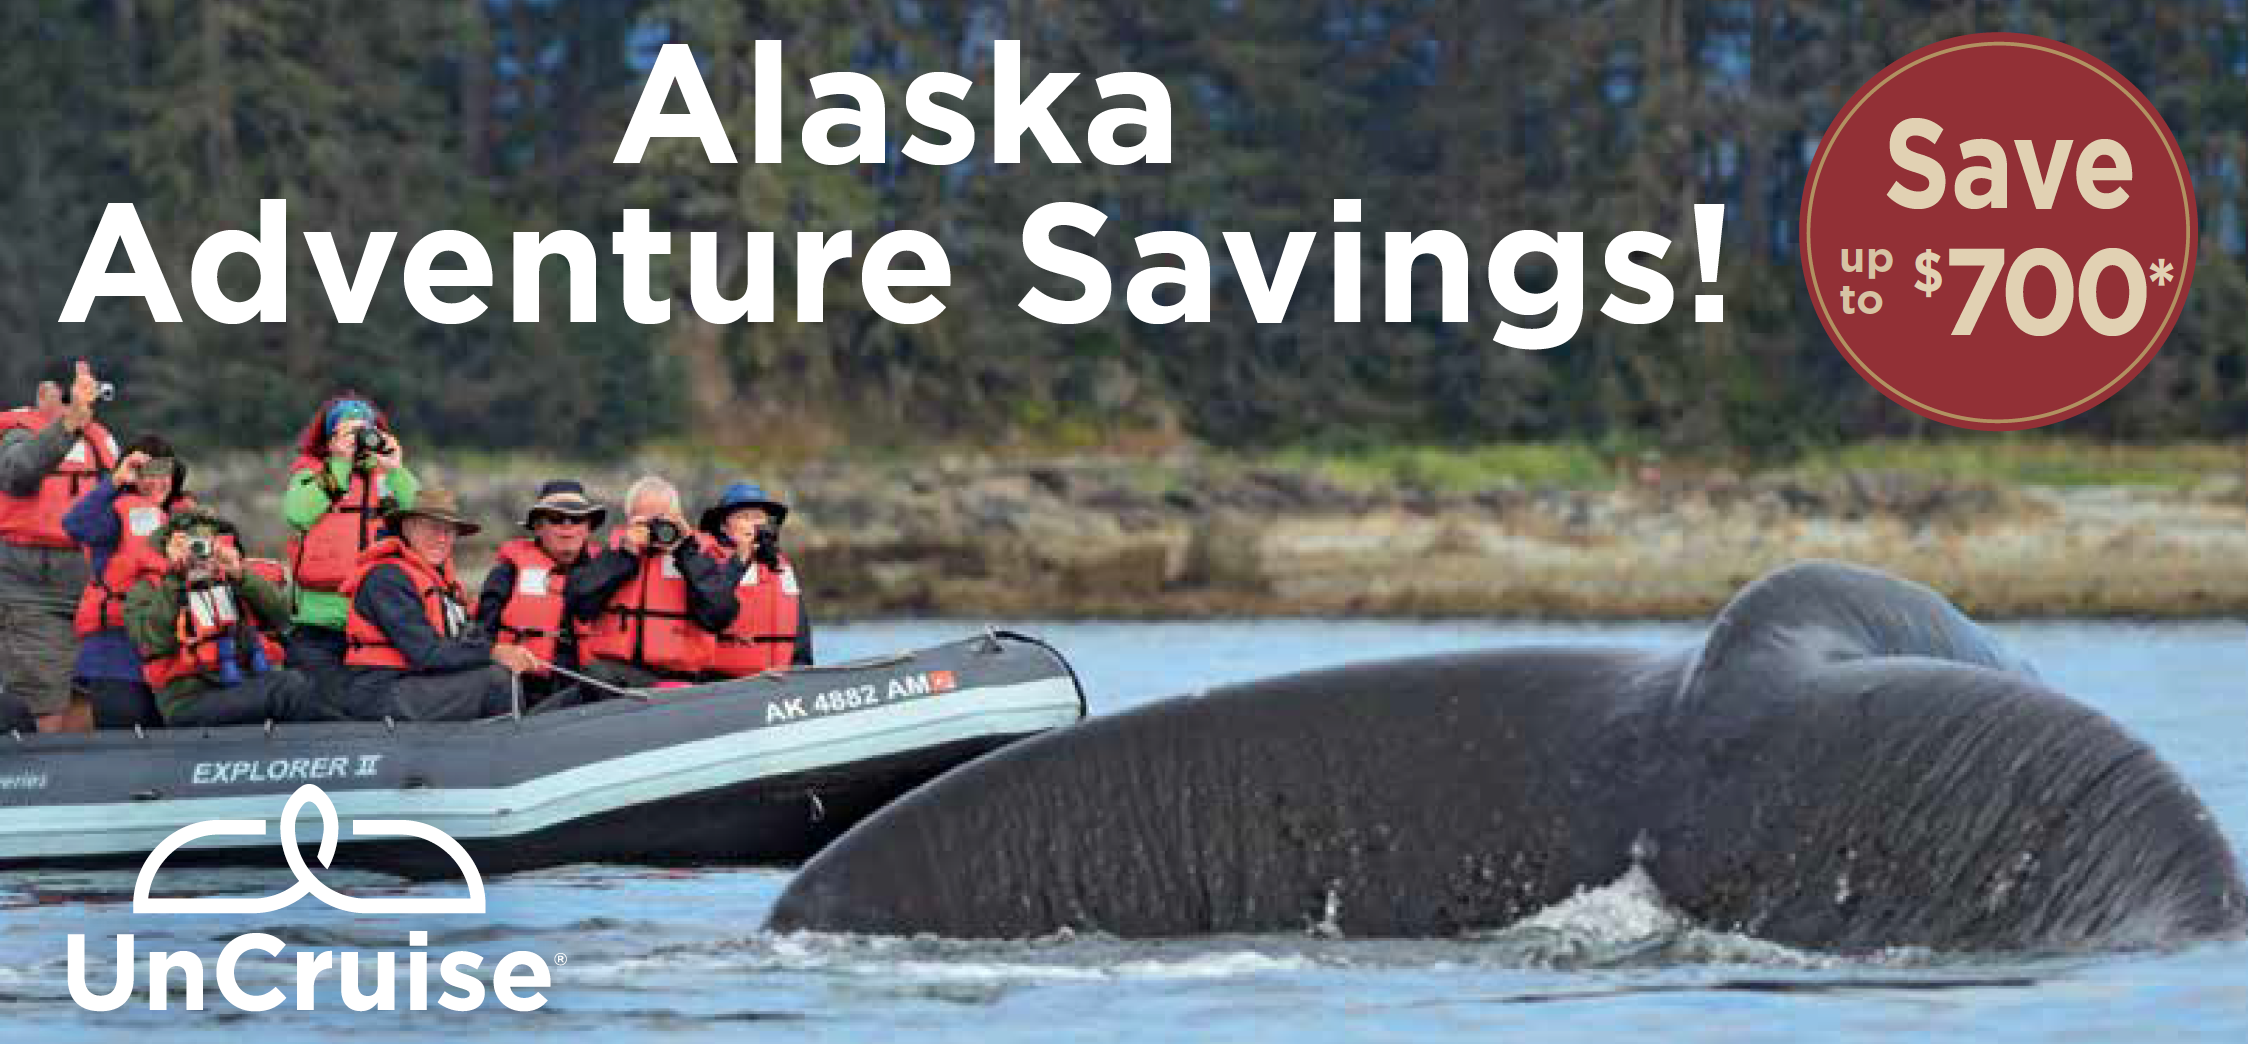 Save up to $700 on Alaska Adventure Savings